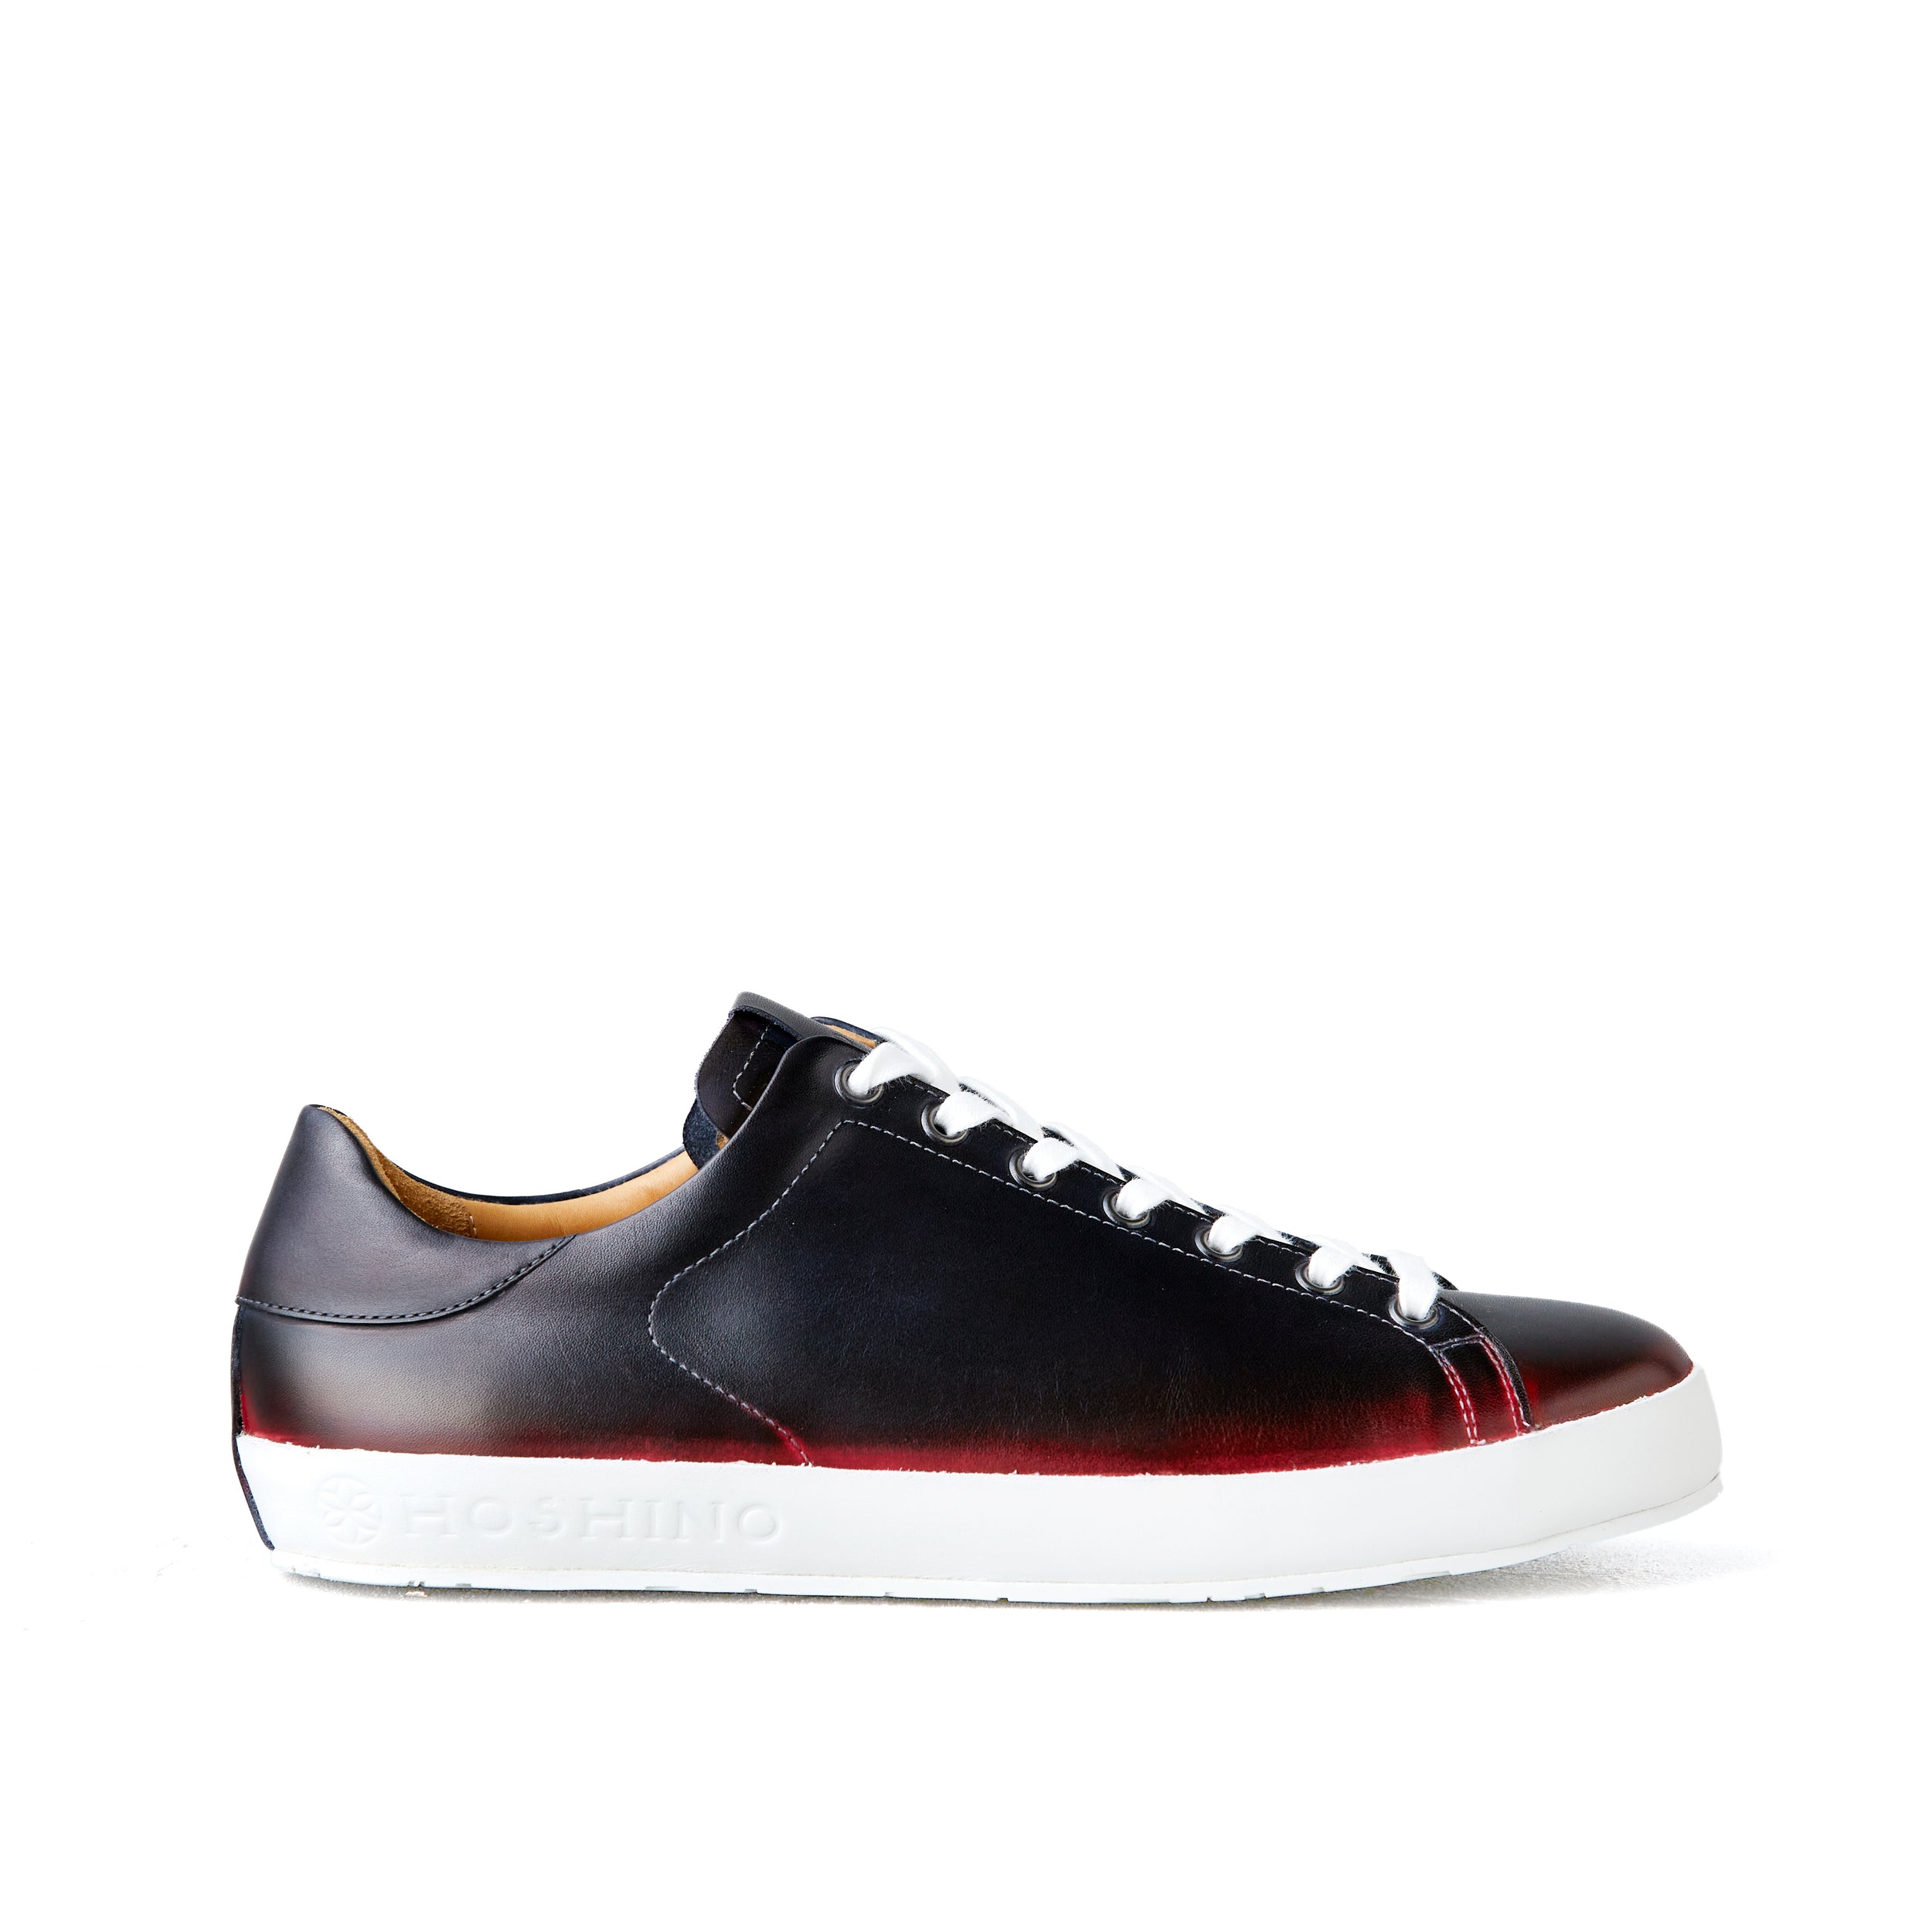 [women's] Liberte - low-top sneakers - red x black patina calfskin